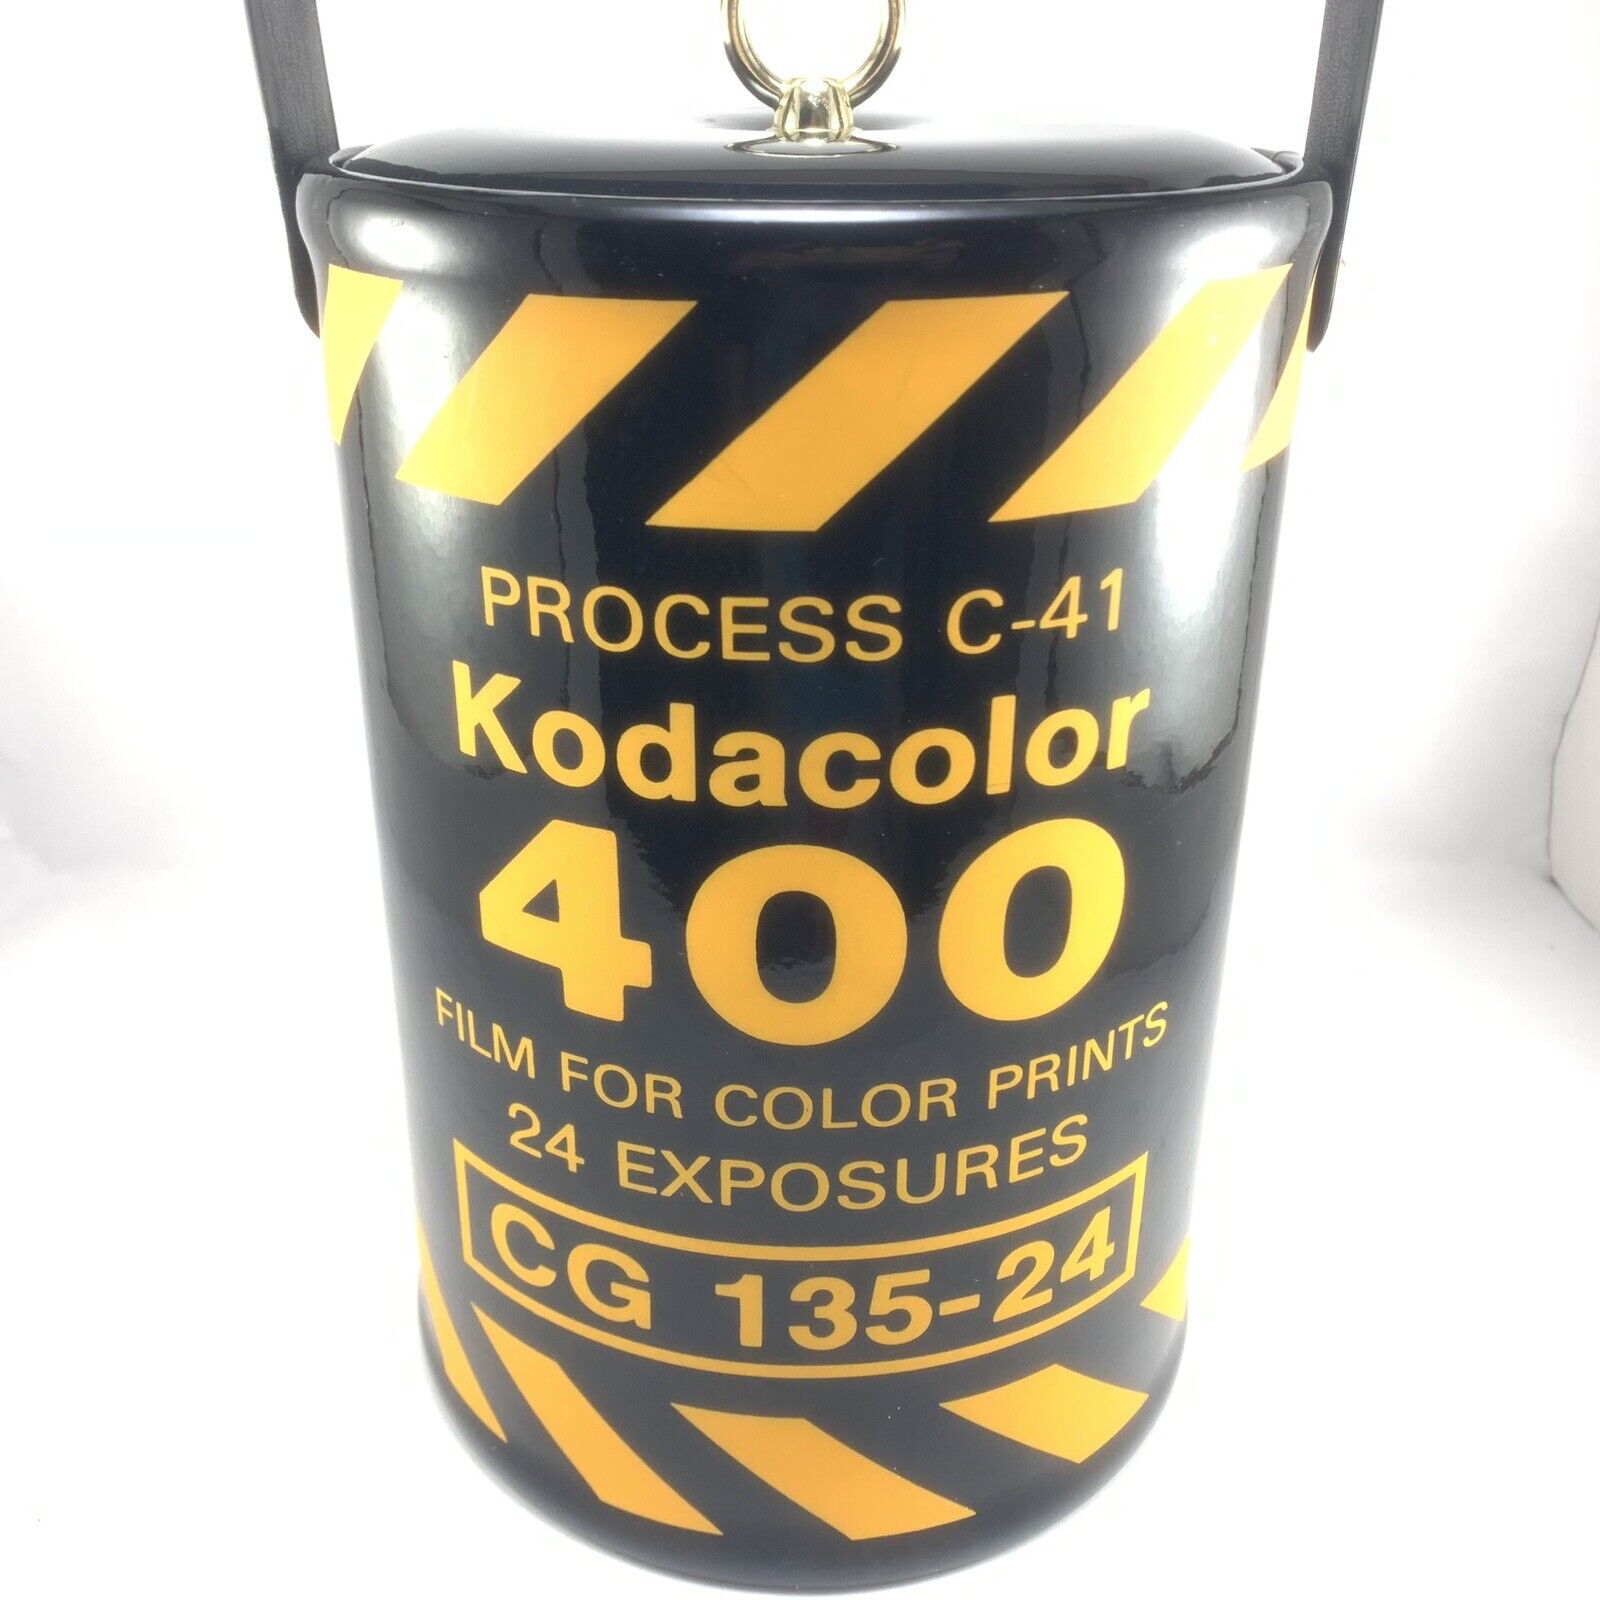 Vtg Kodak C 41 Kodacolor 400 Film Roll Canister Ice Bucket Employee Swag